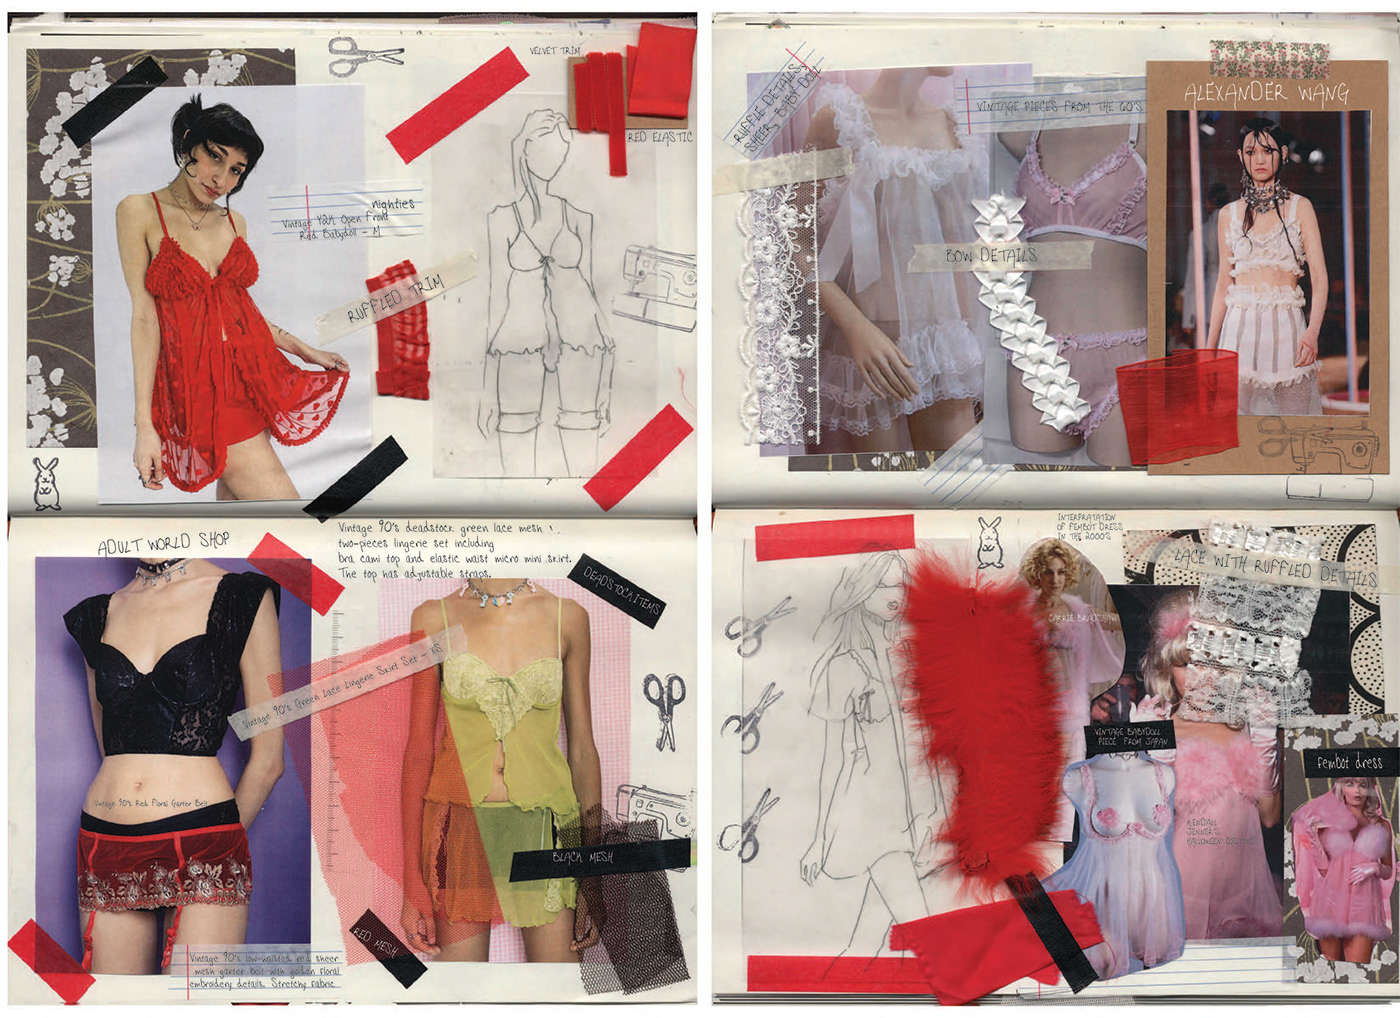 designer Digital Art  digital illustration Drawing  fashion design fashion portfolio portfolio Project sketch student